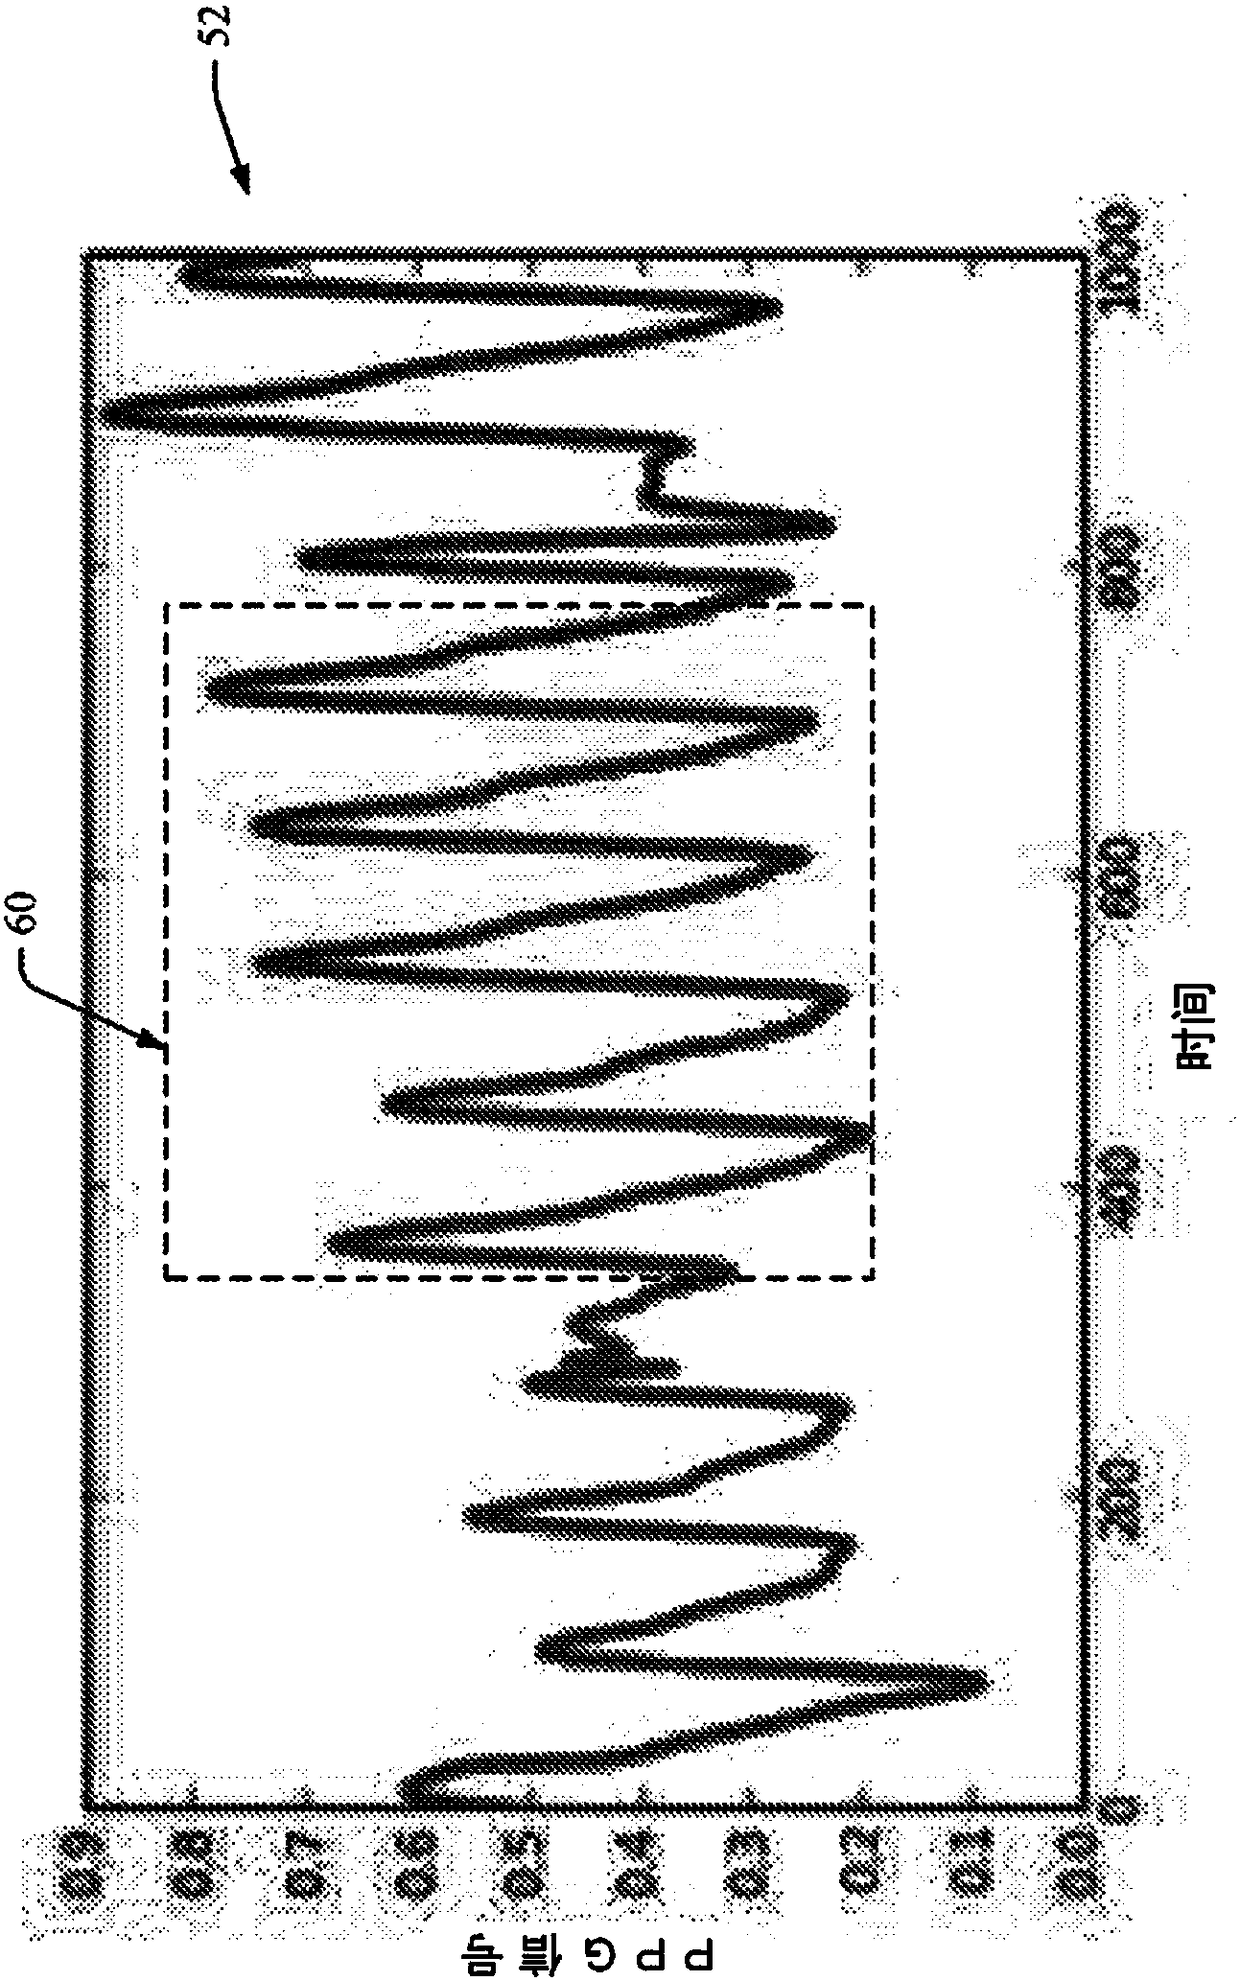 Method to quantify photoplethysmogram (PPG) signal quality